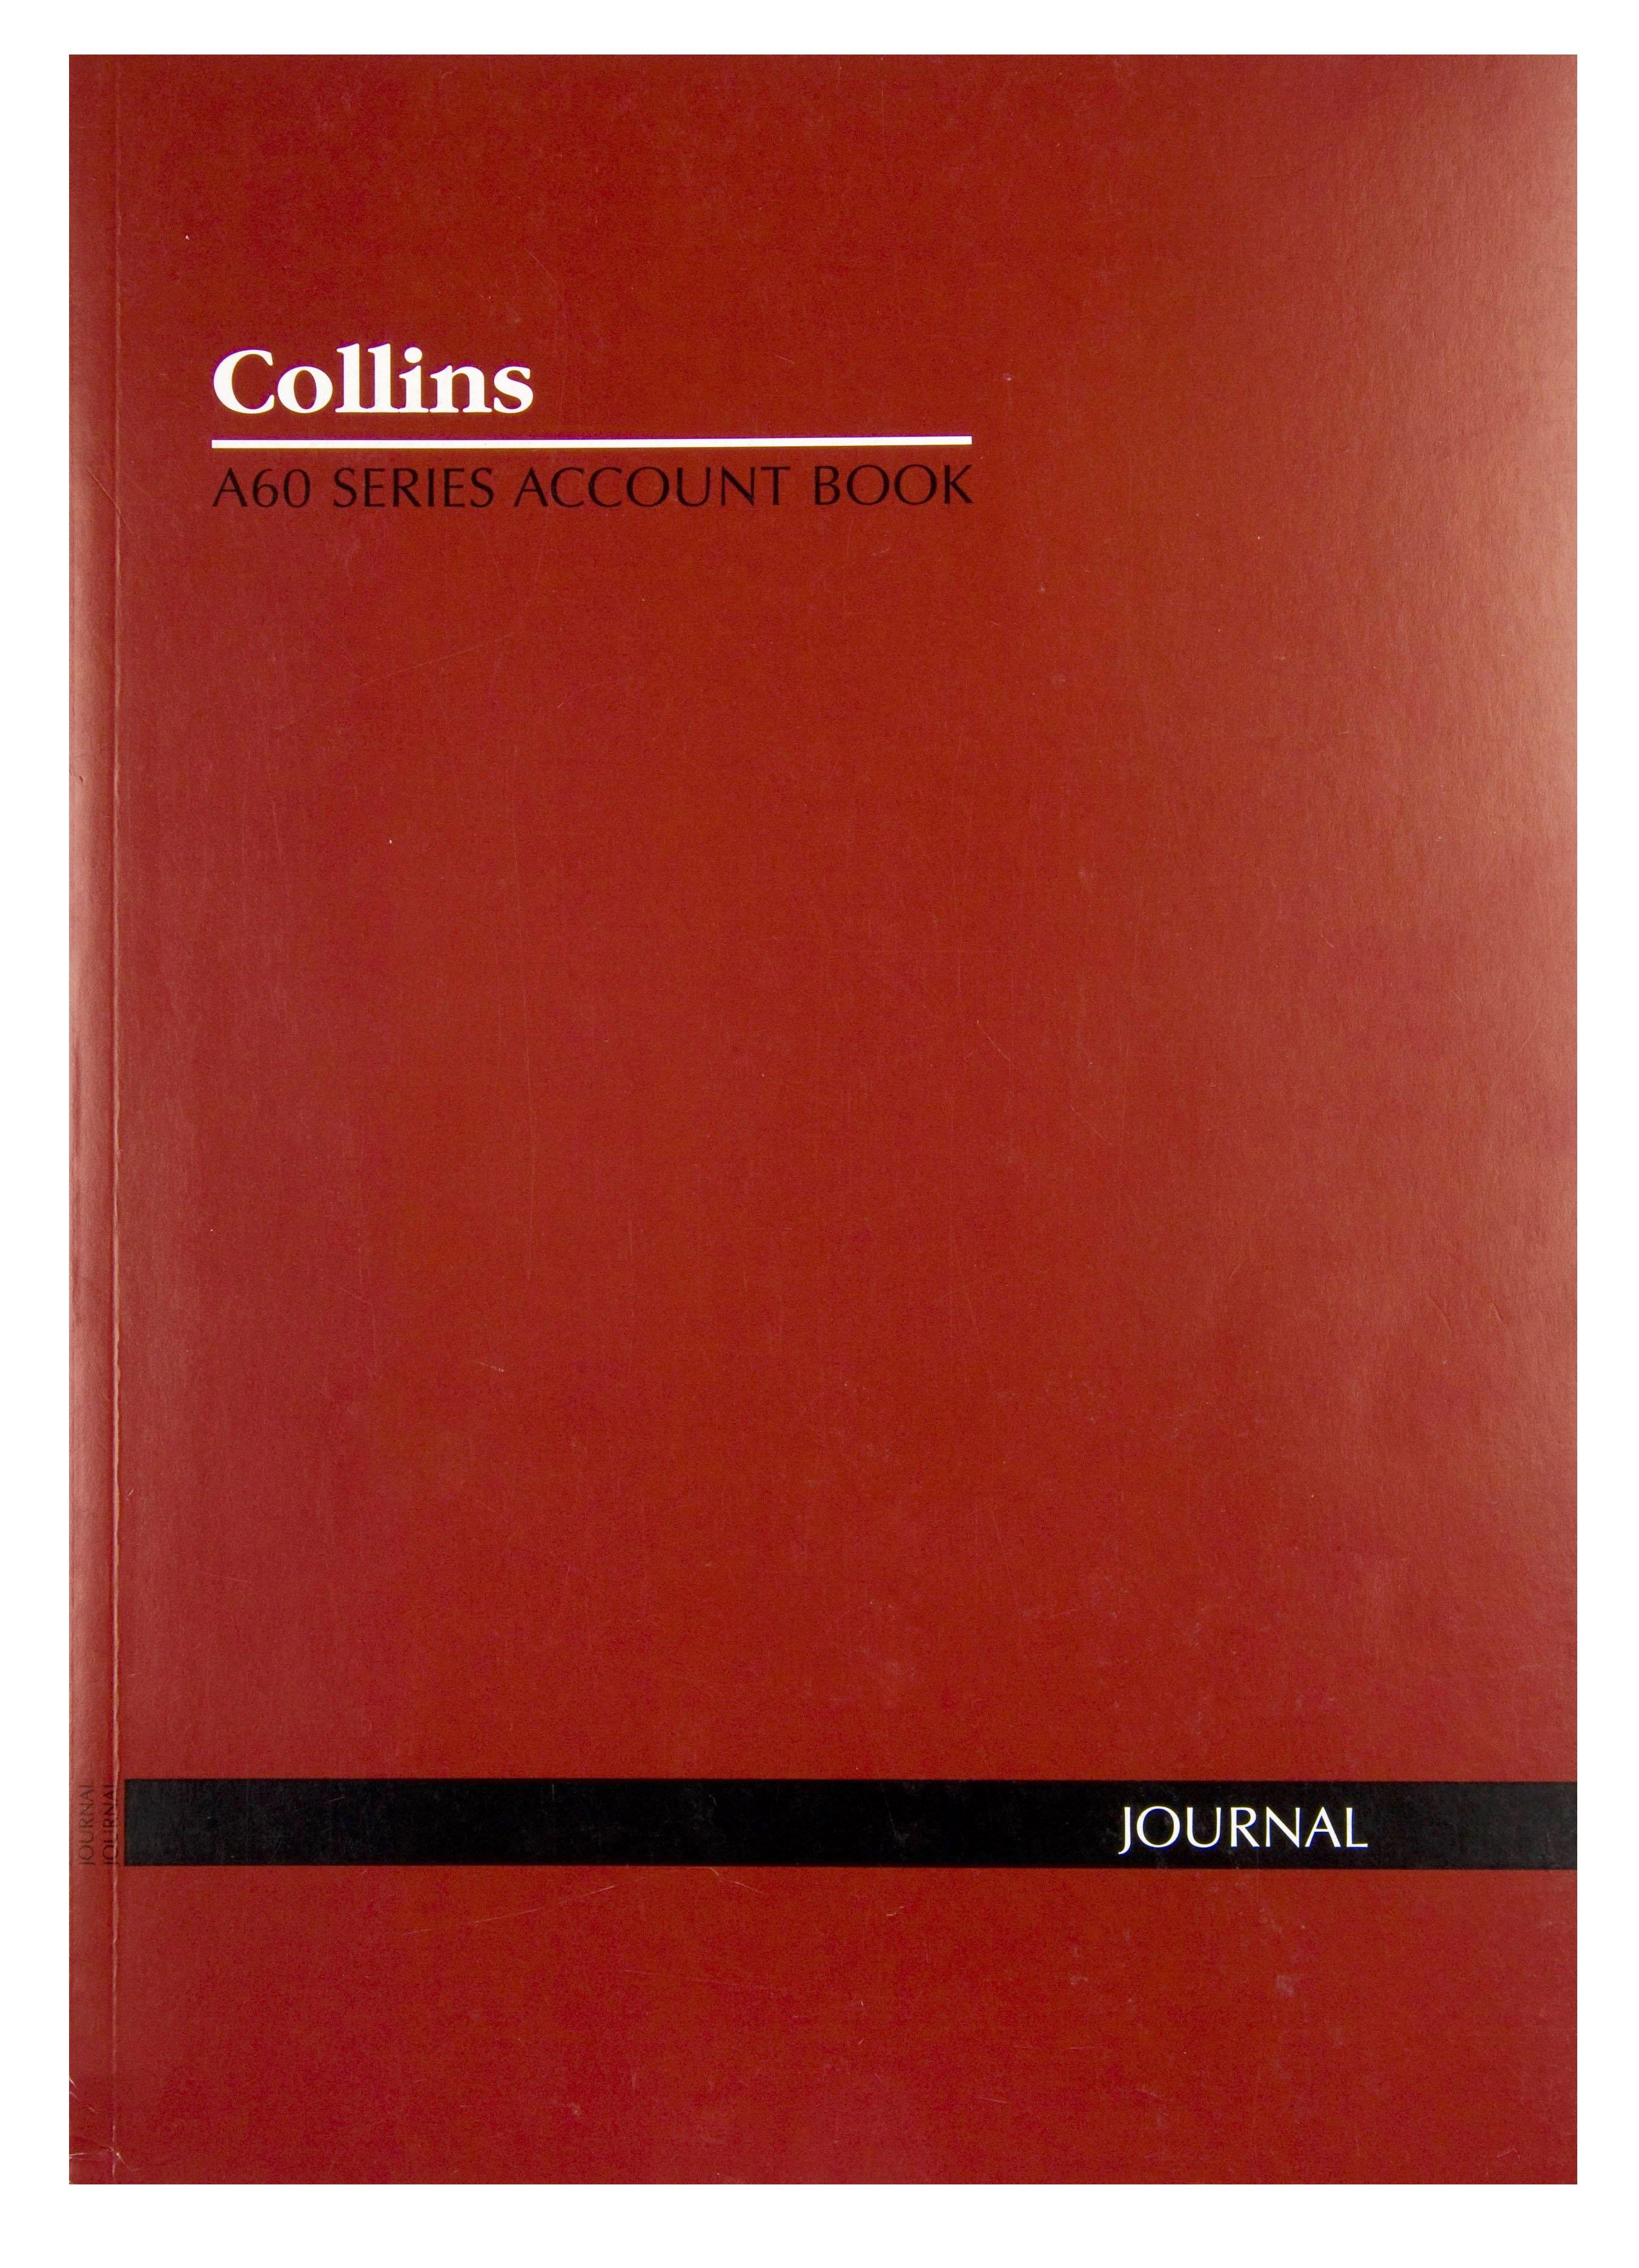 Account Book 'A60' Series Journal - Collins Debden